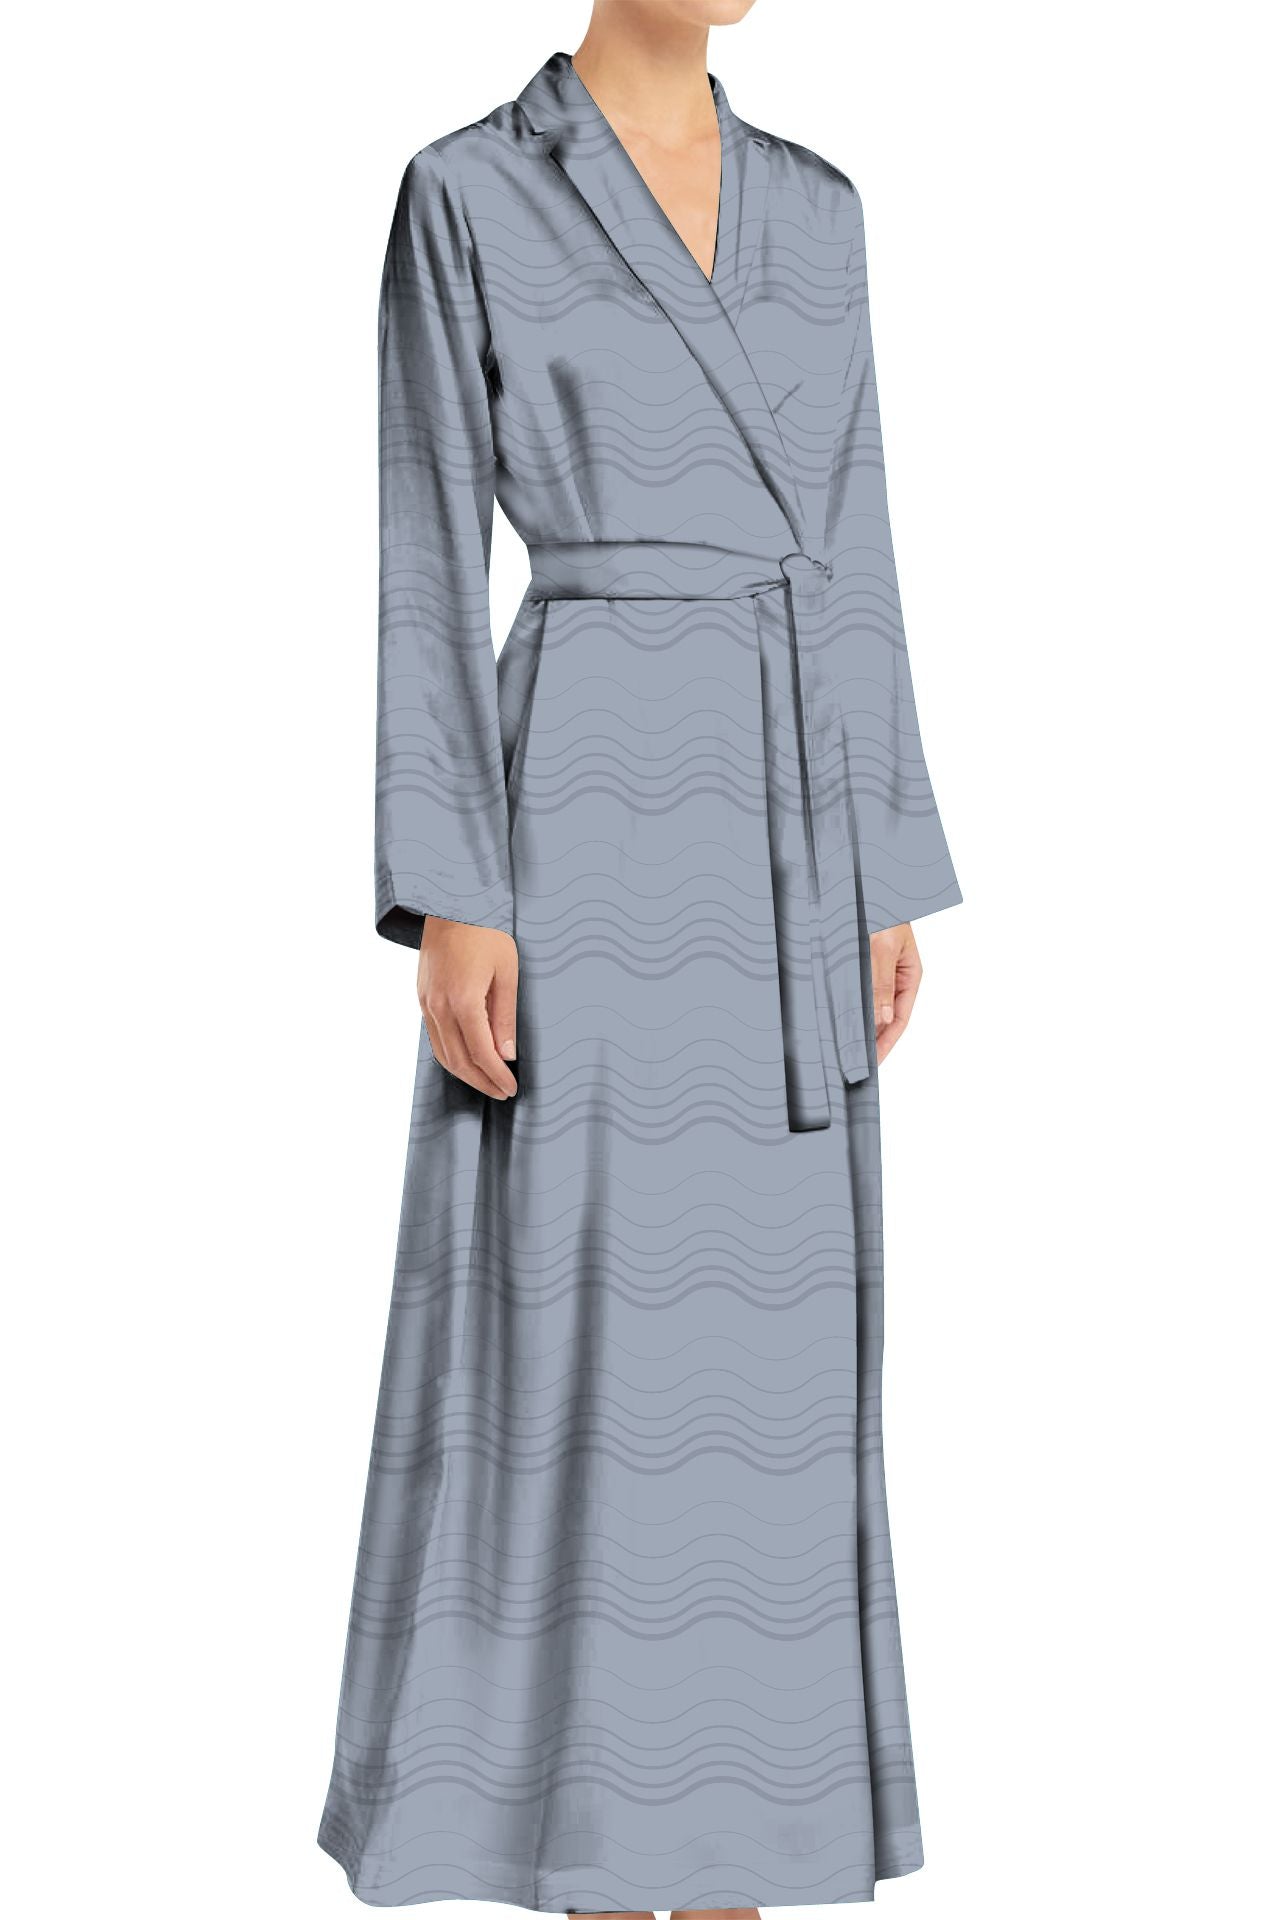 "maxi womens wrap dress" "light grey wrap dress" "Kyle X Shahida" "womens grey wrap dress"